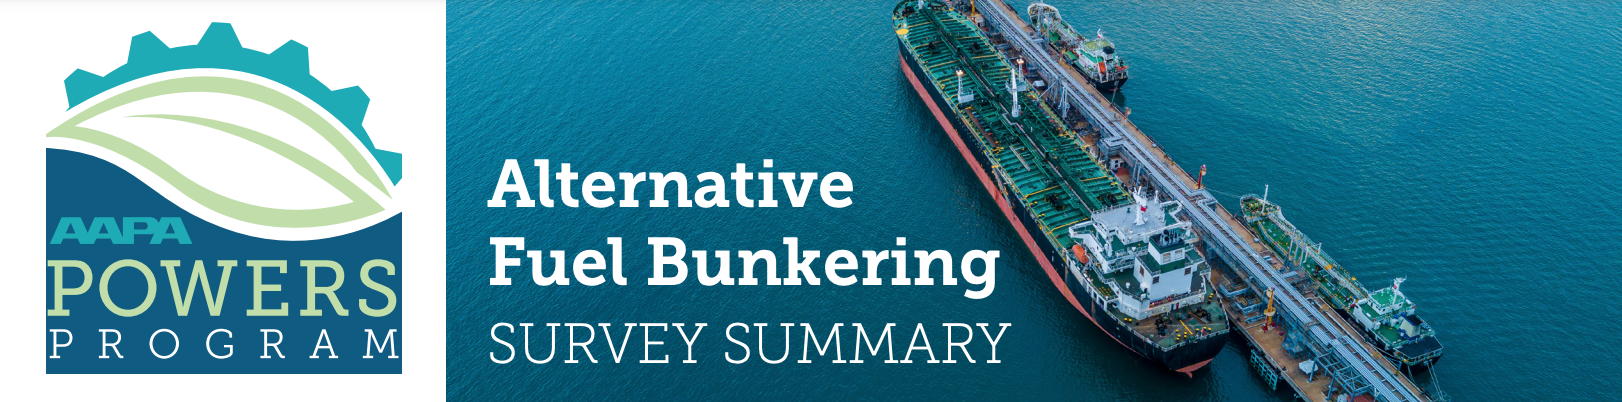 Alternative Fuel Bunkering Survey Summary